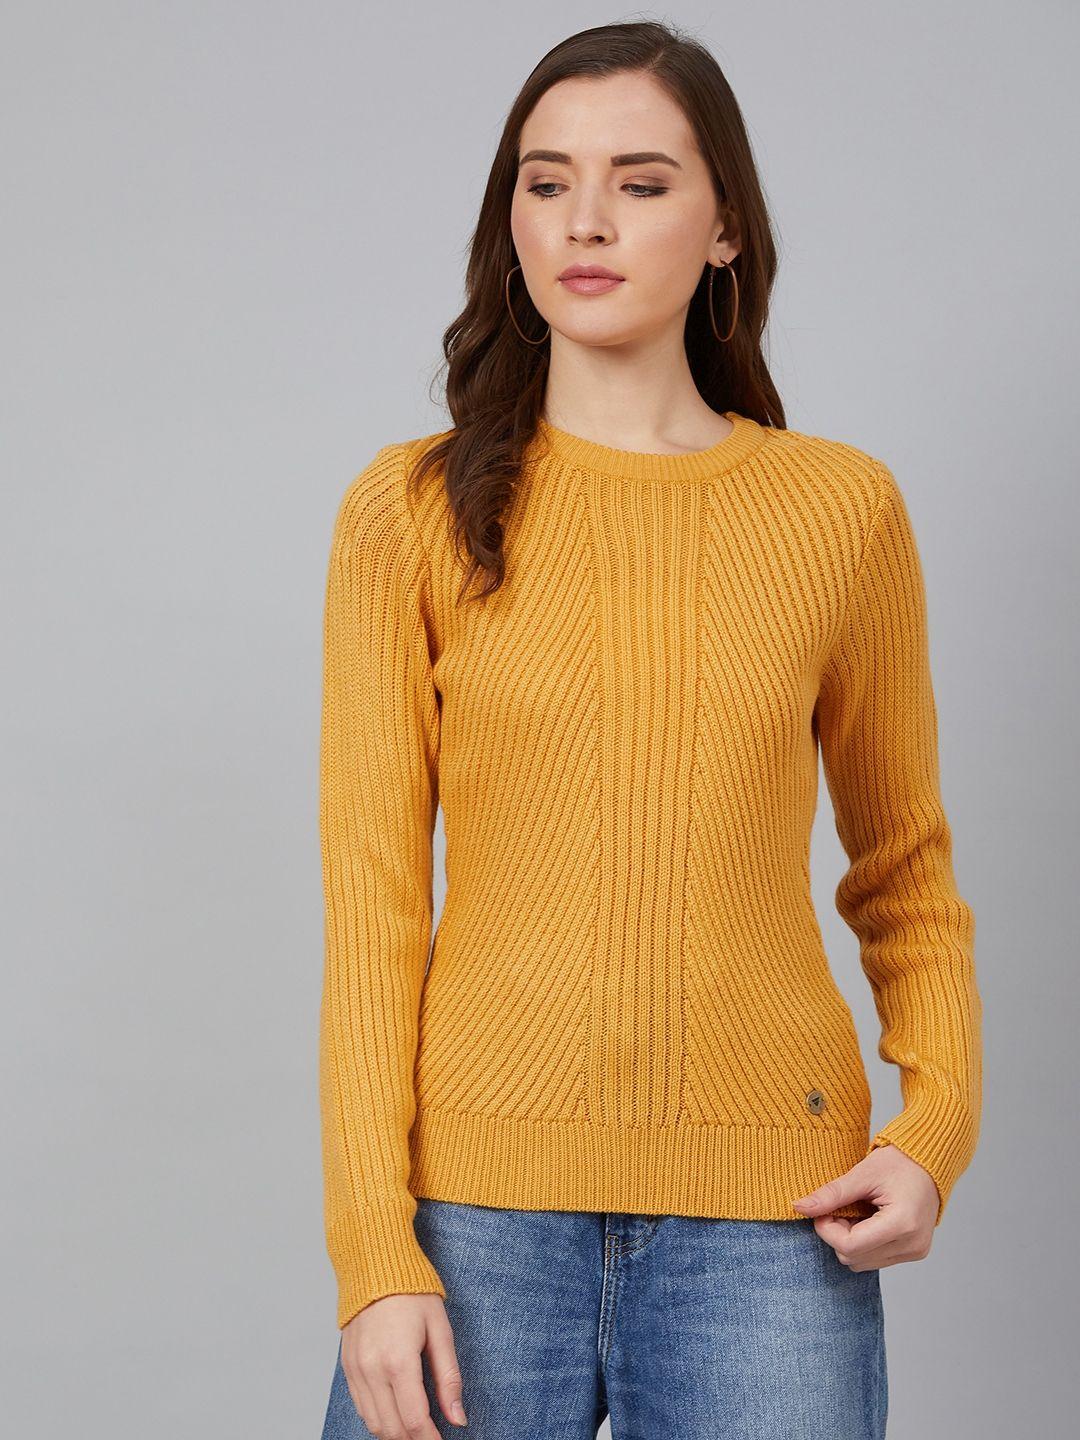 cayman-women-mustard-yellow-self-striped-sweater